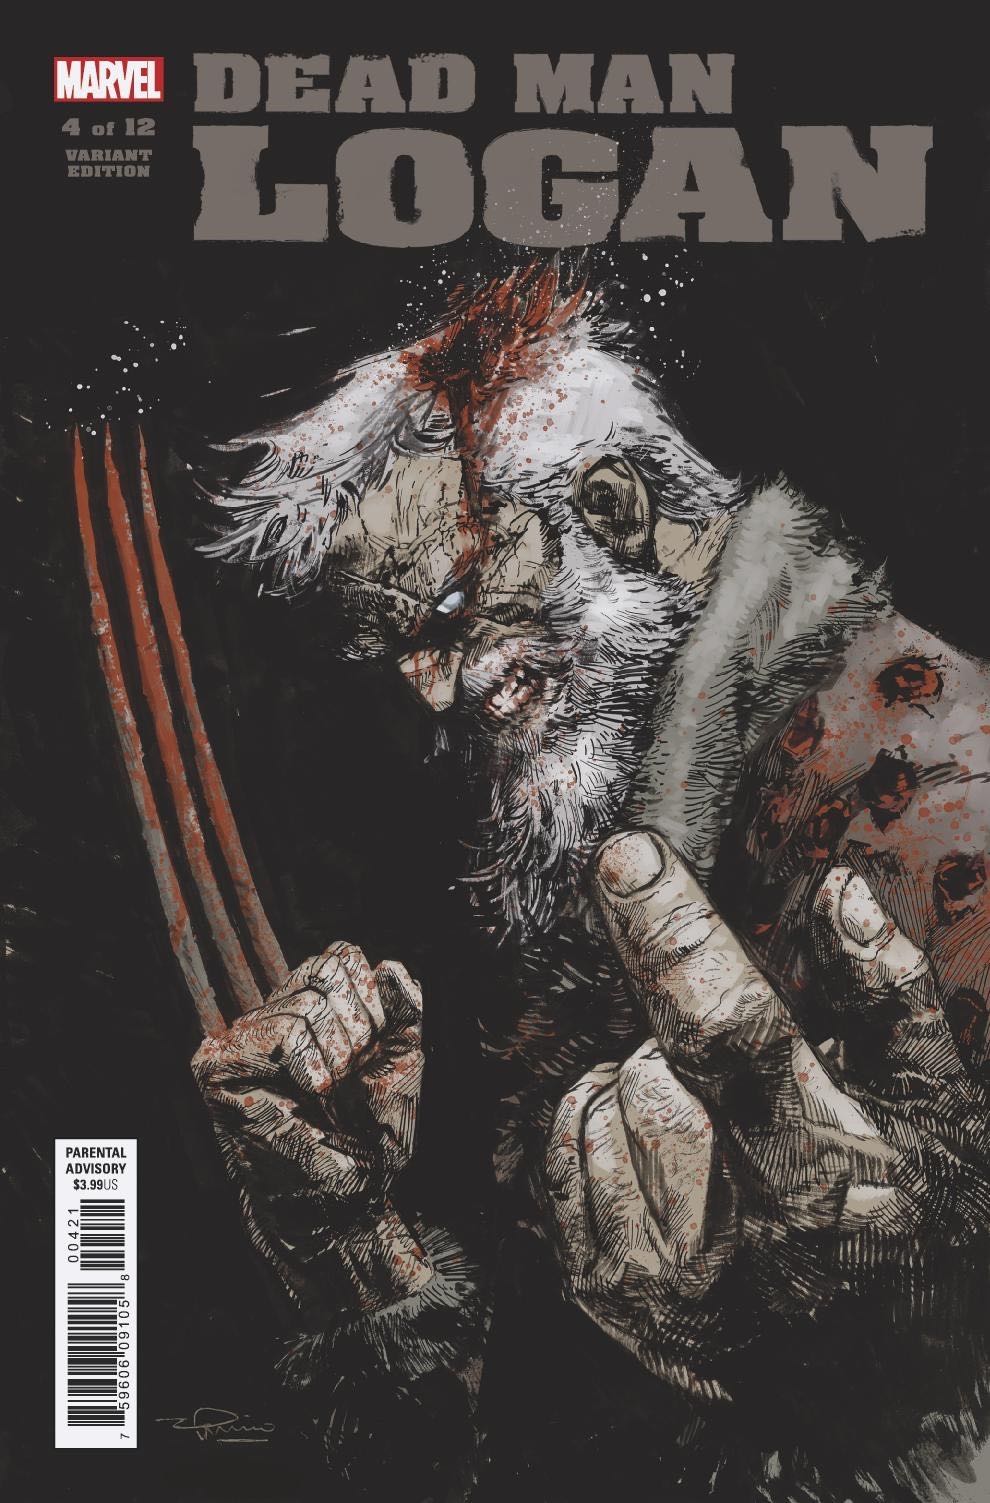 Marvel Preview: Dead Man Logan #4